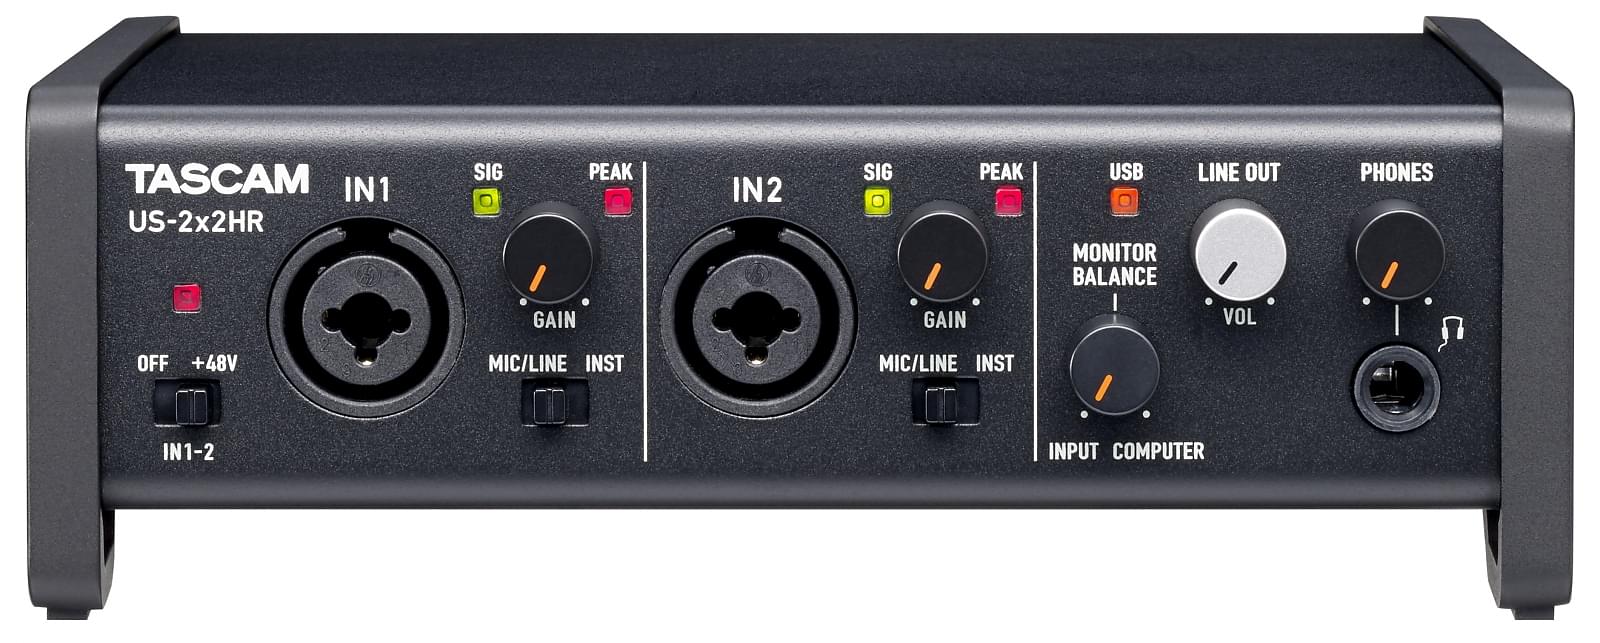 Tascam US-2x2HR | High-Resolution USB Audio/MIDI Interface (2 in 